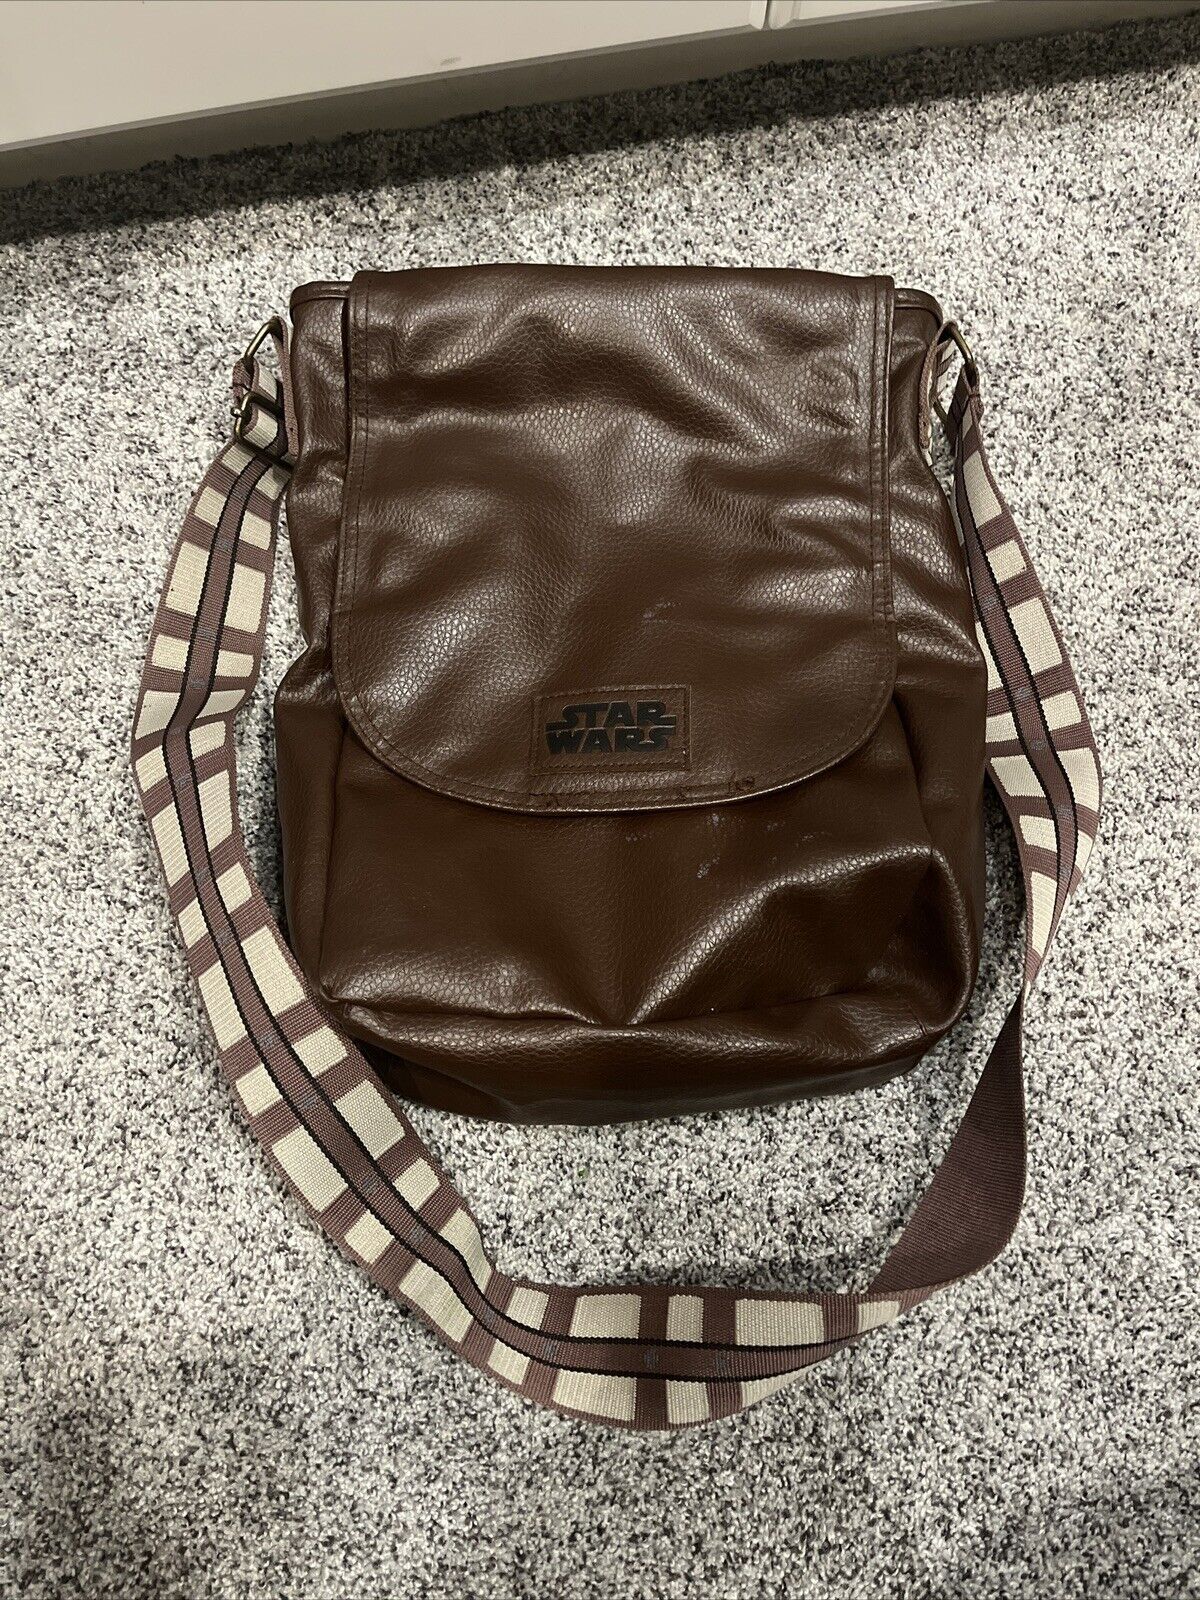 Star Wars Chewbacca Brown Leather Messenger Bag Satchel Purse DISNEY A Bit Old